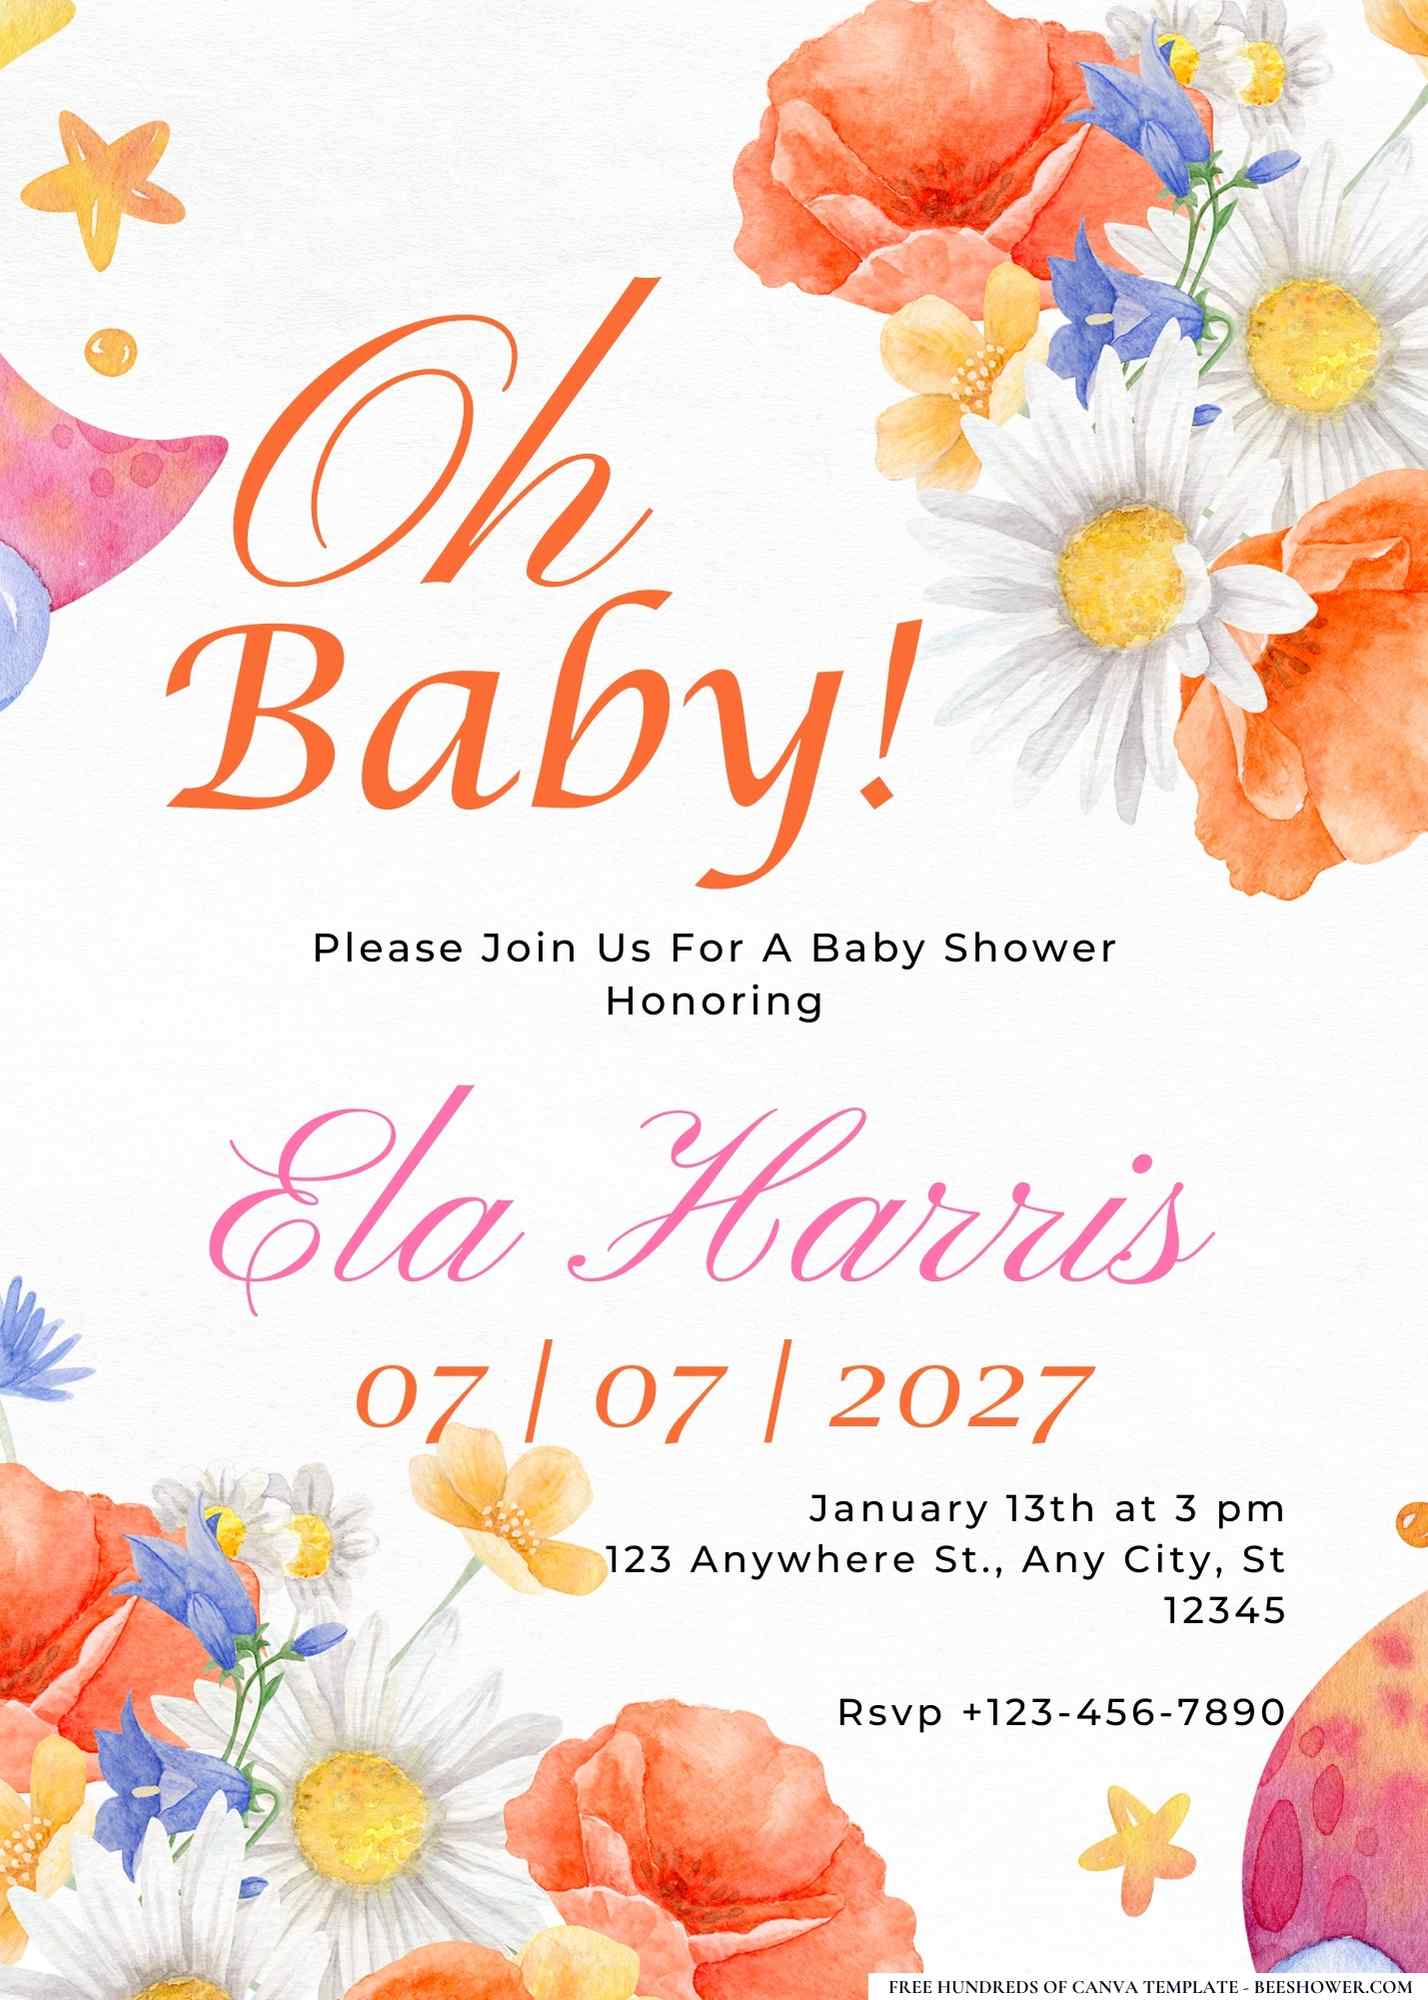 Daisy Dreams and Delights Baby Shower Invitation